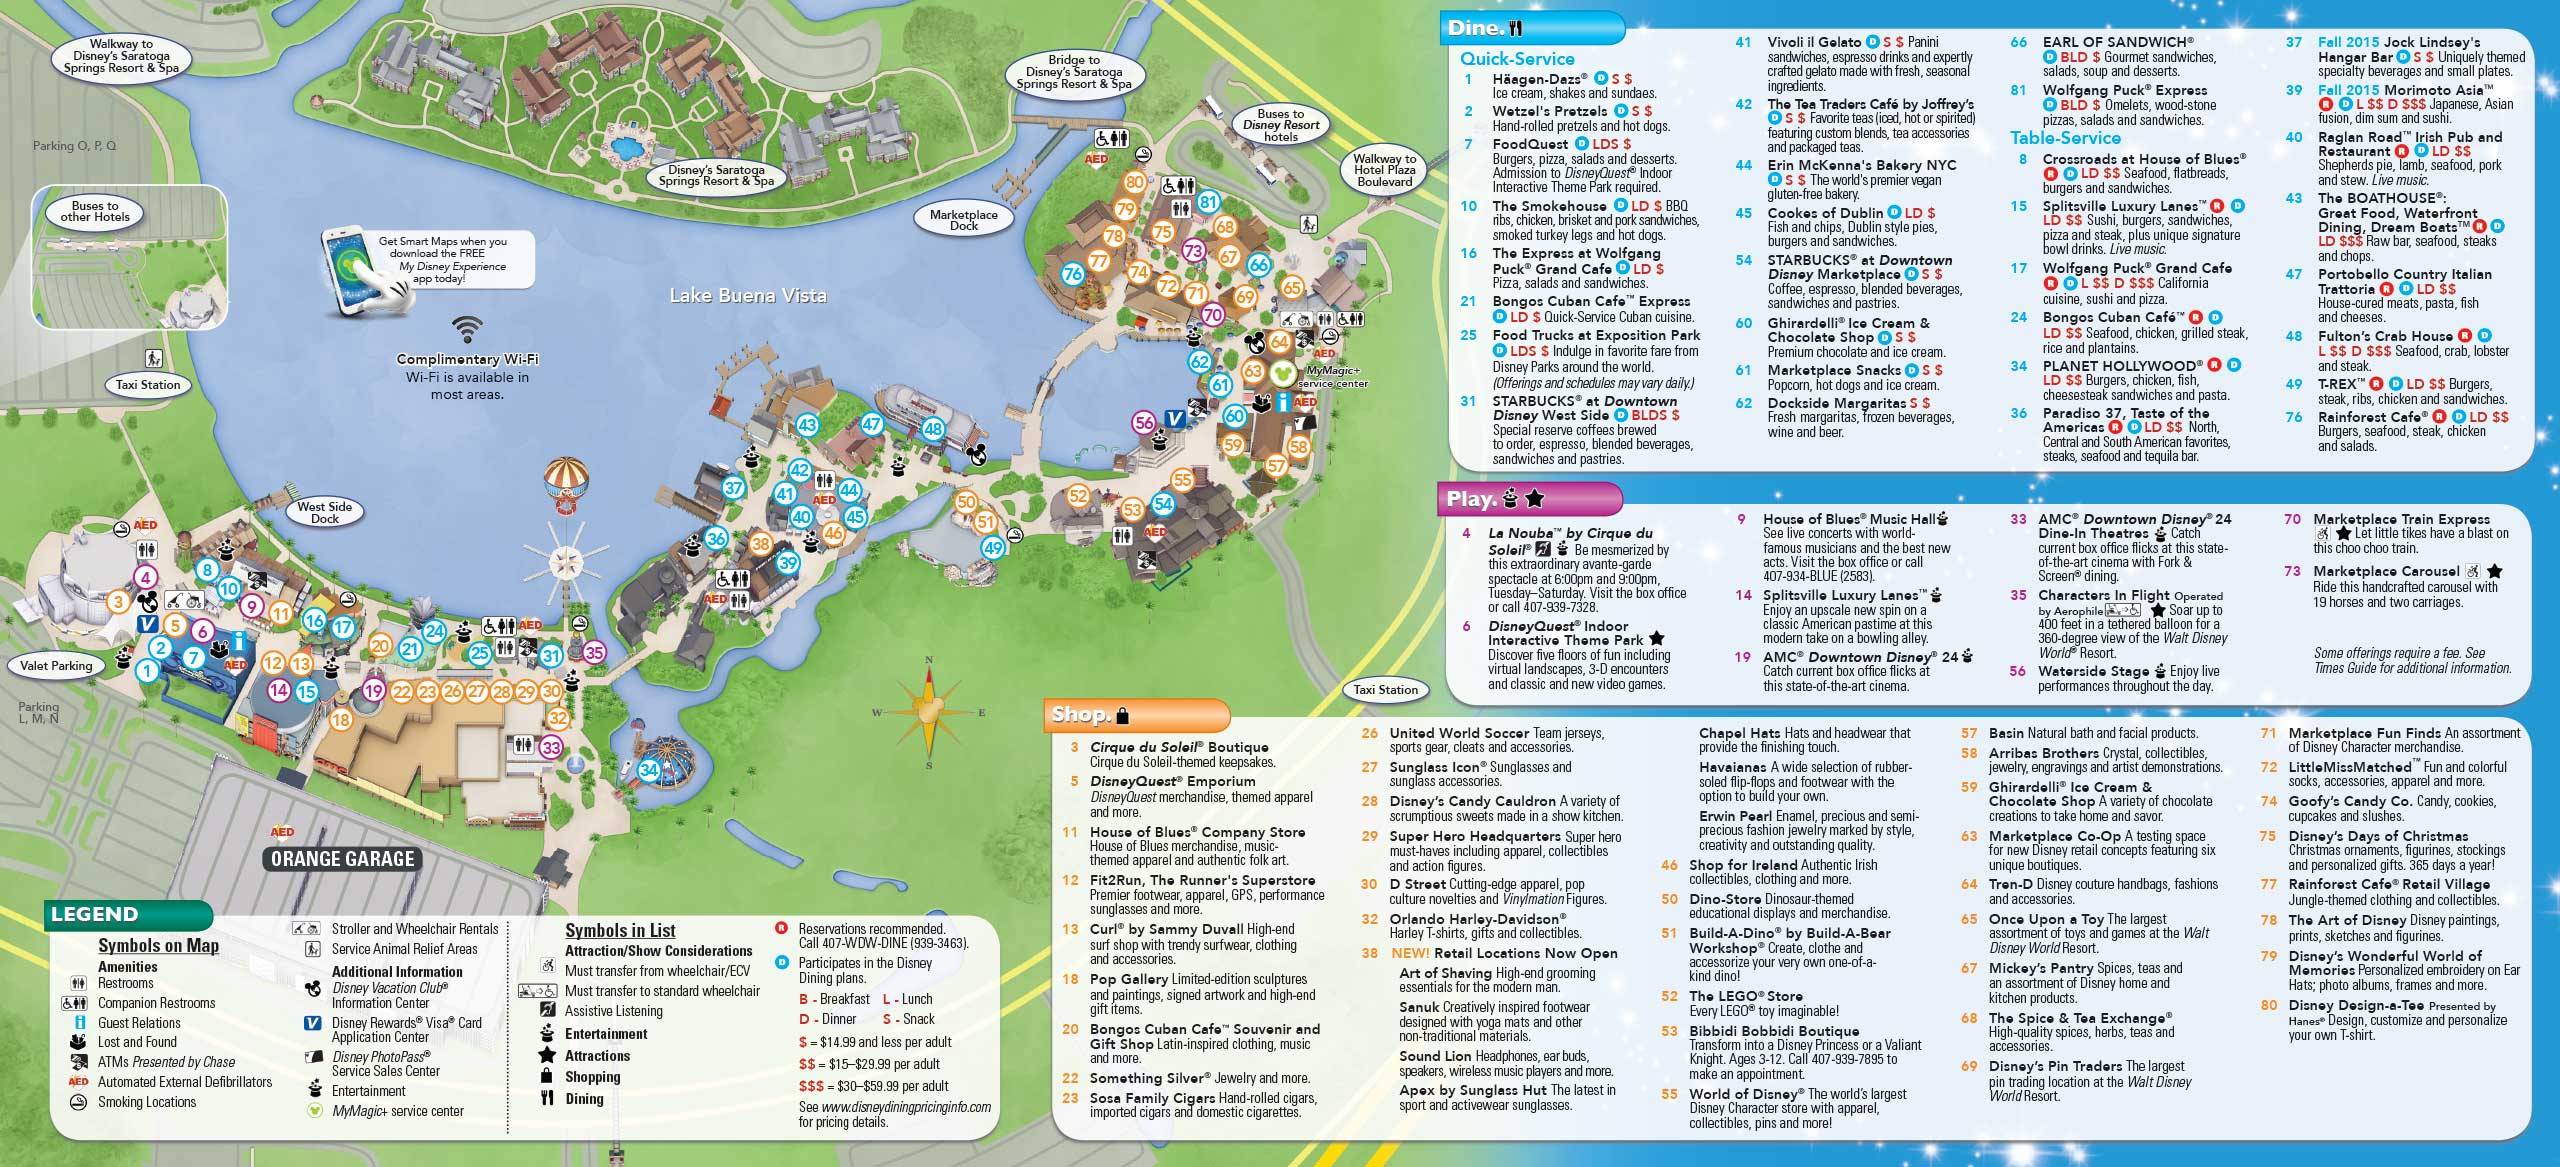 Downtown Disney / Disney Springs August 2015 Guide Map